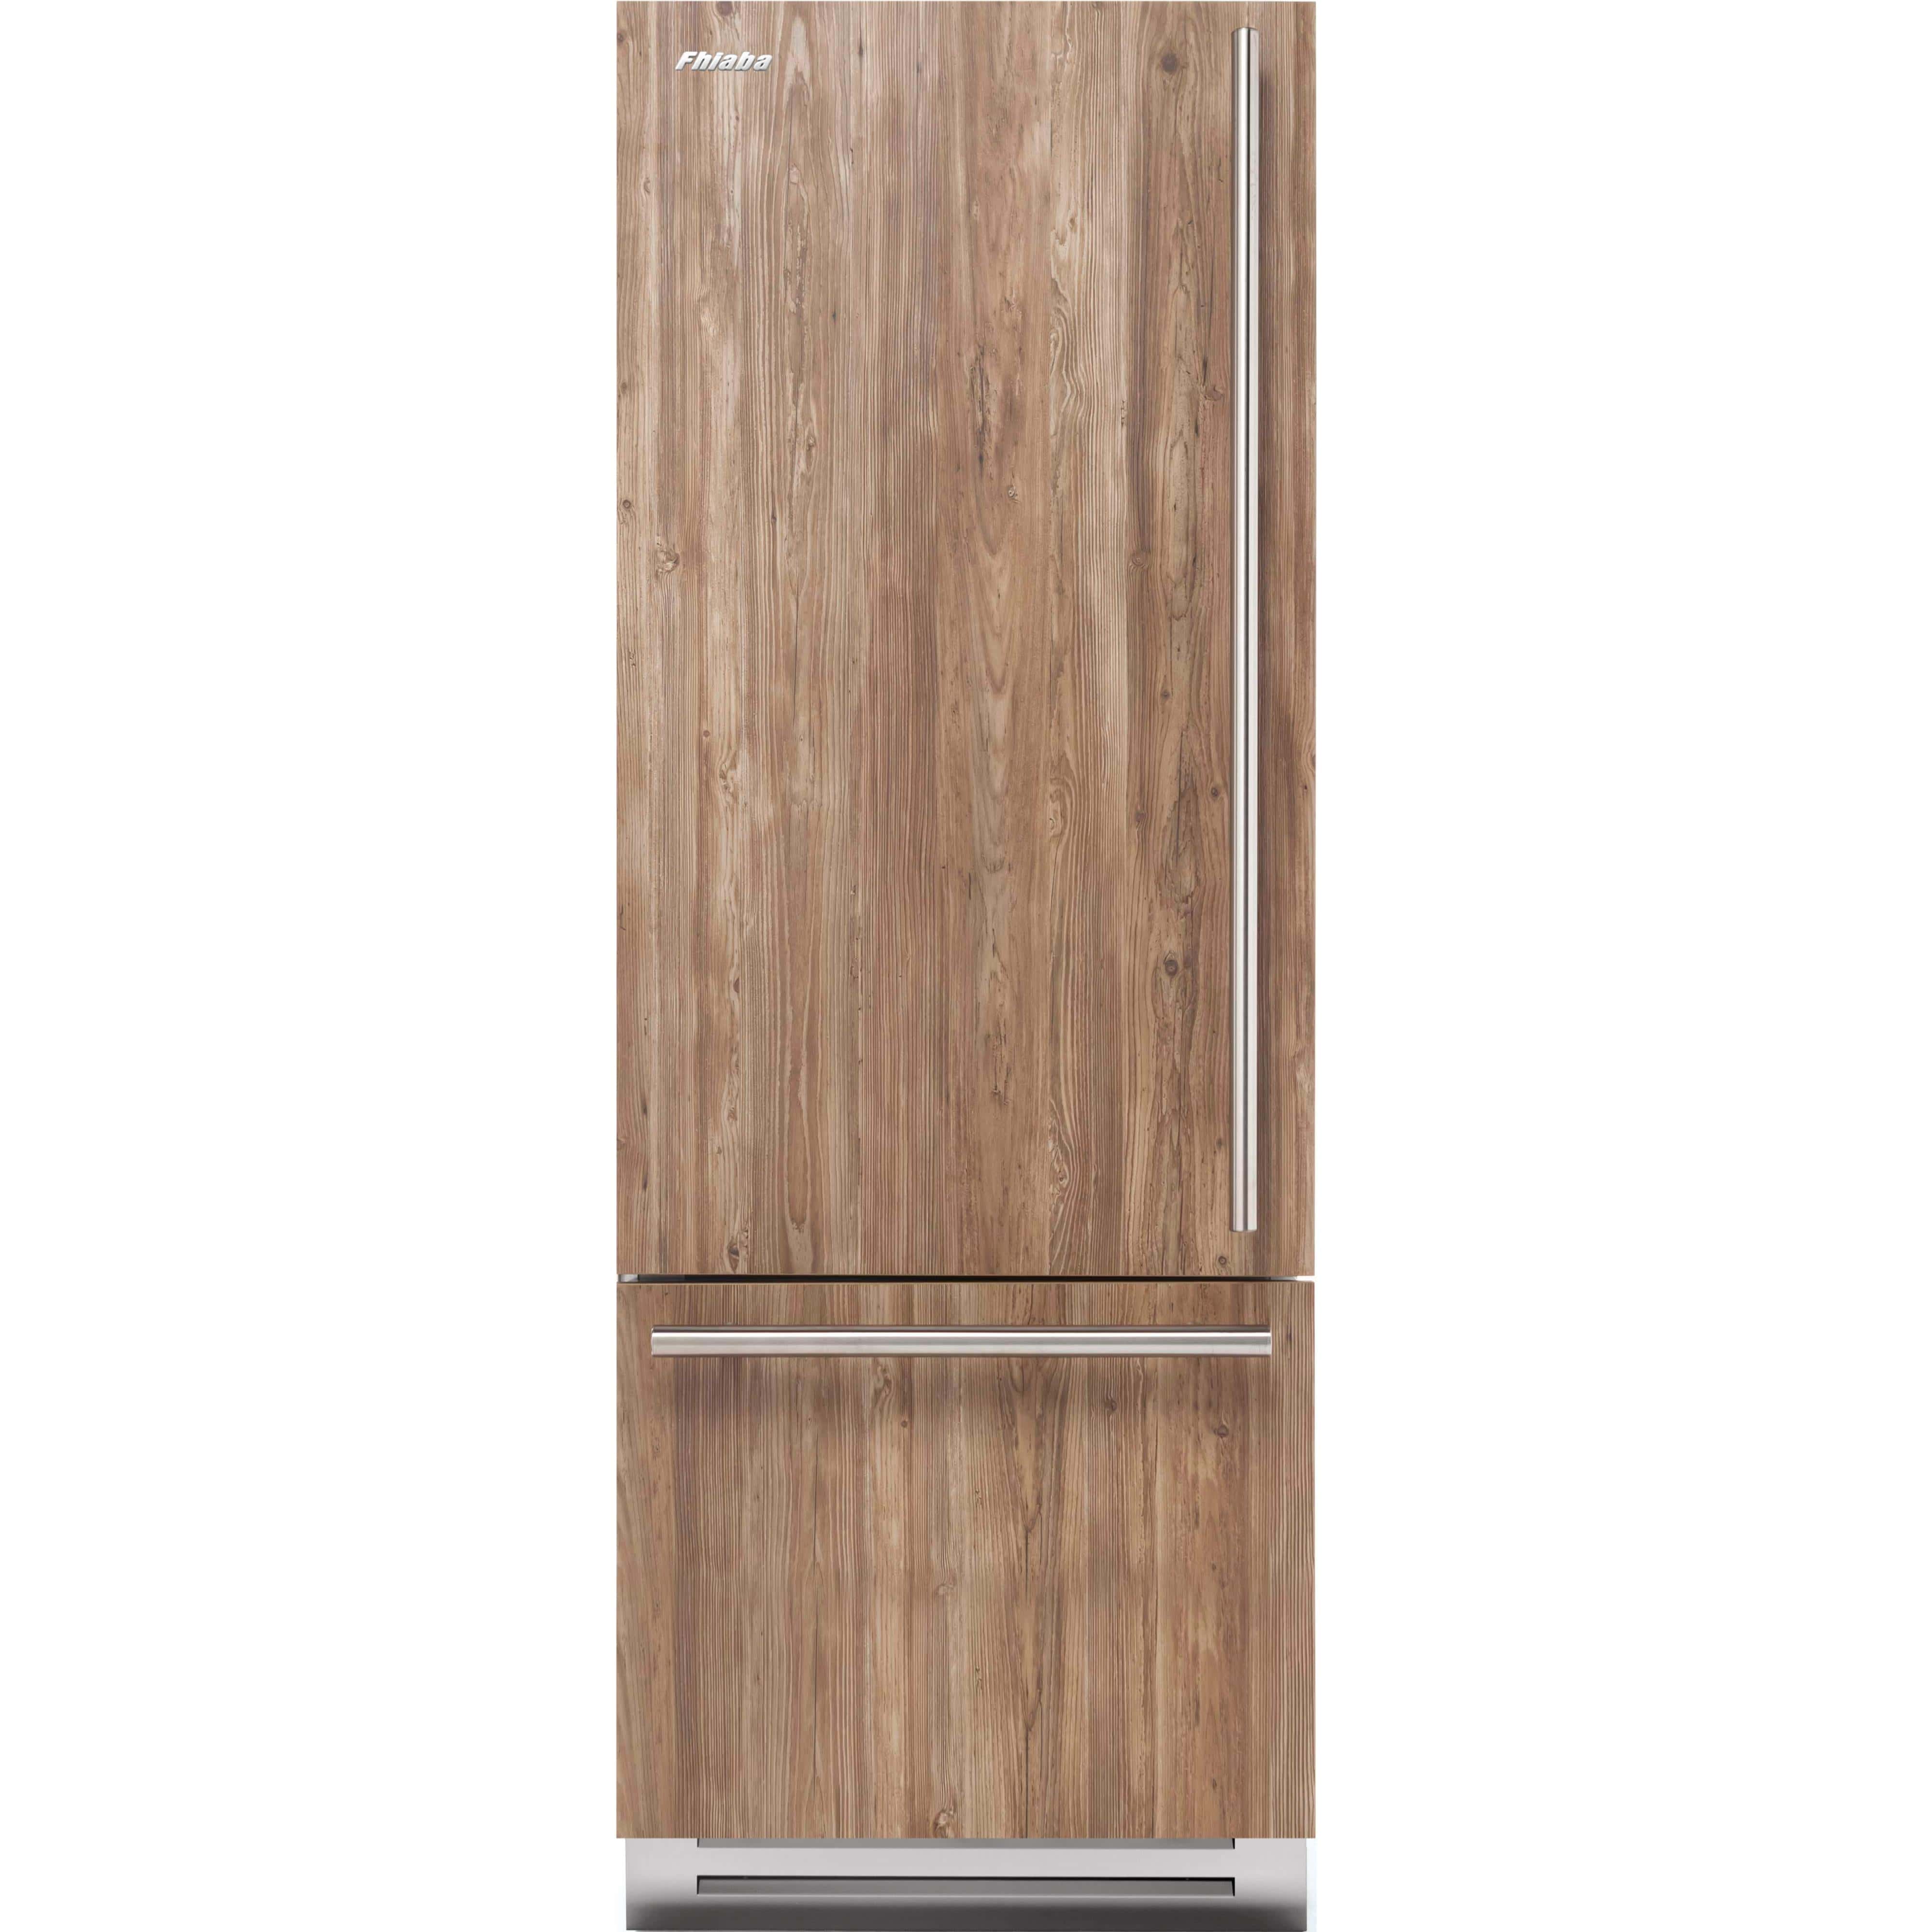 Fhiaba 30-inch, 14.5 cu.ft. Built-in Bottom Freezer Refrigerator with Interior Ice Maker FI30BI-LO1 Refrigerators FI30BILO1 Luxury Appliances Direct